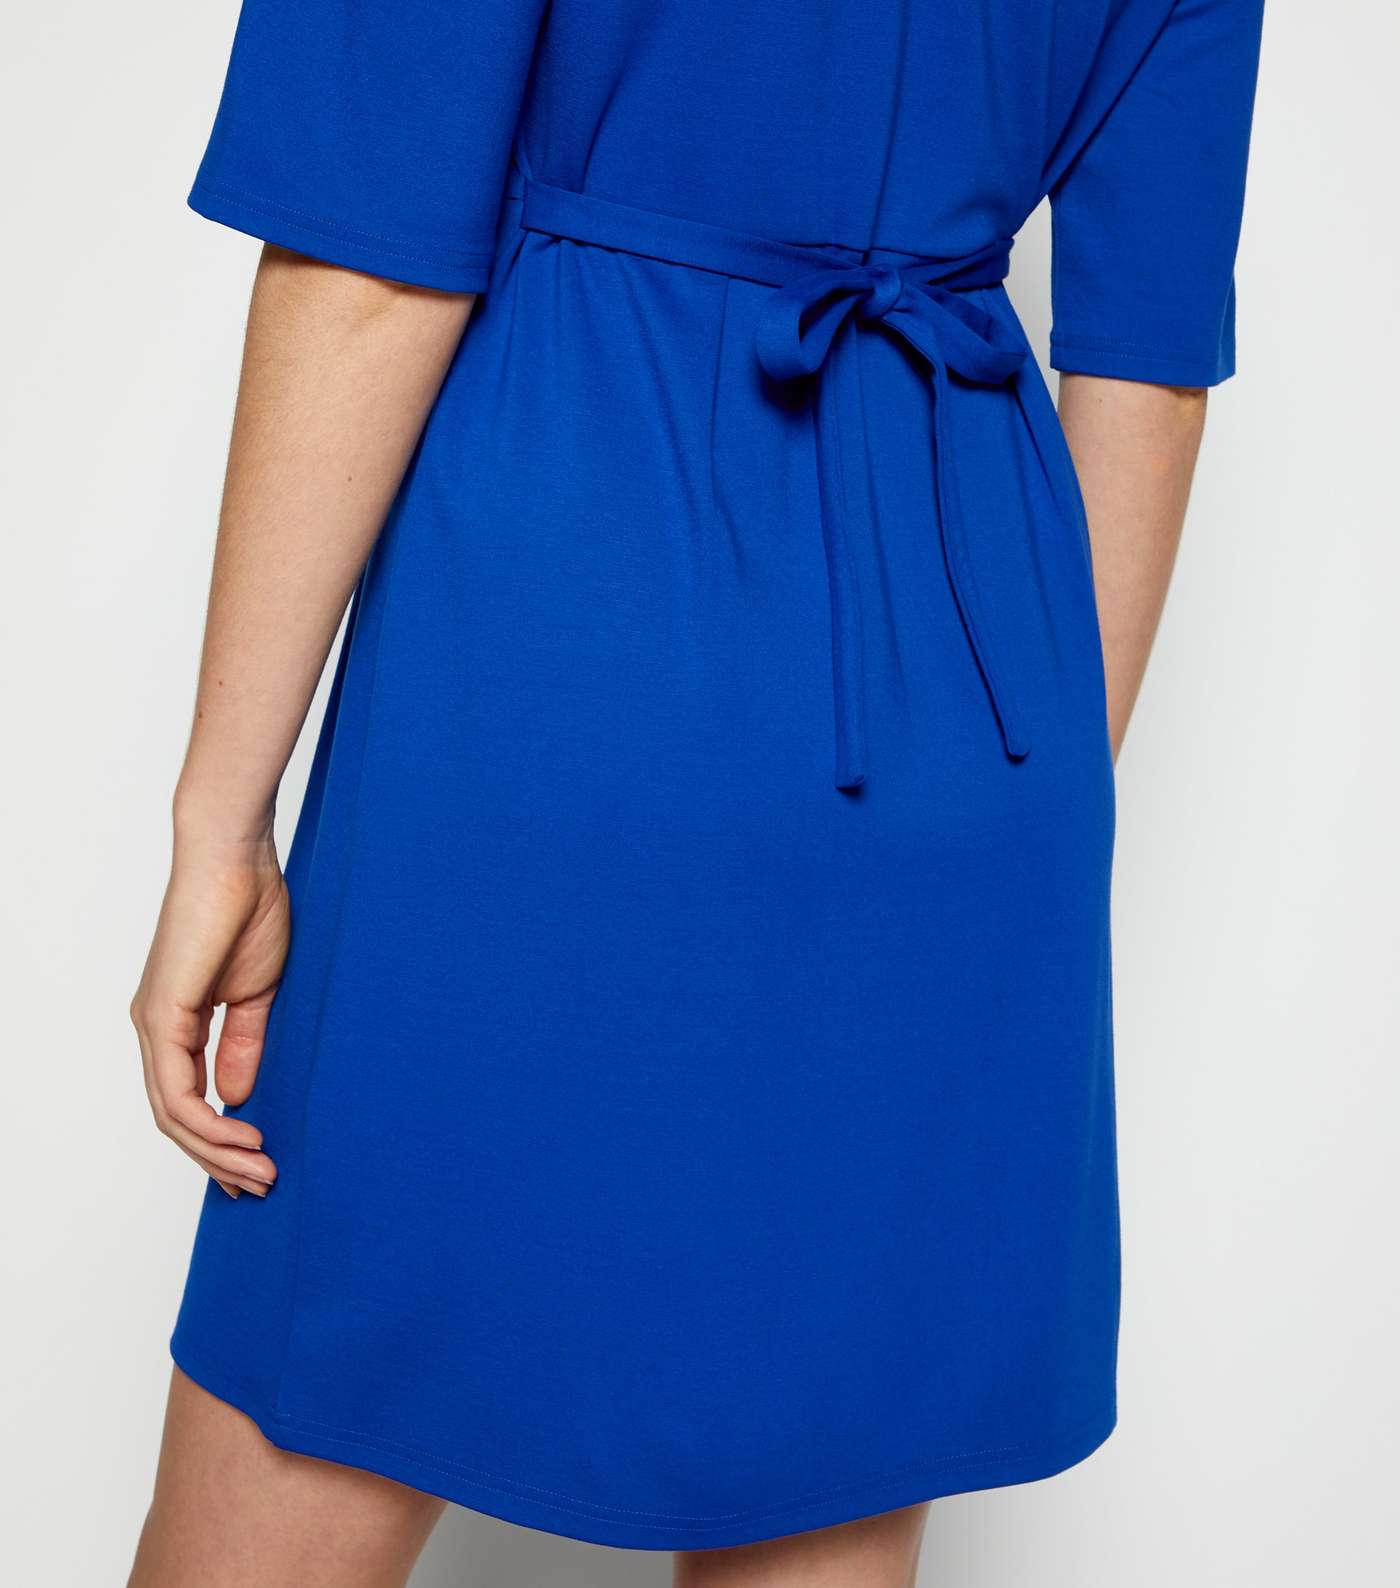 StylistPick Bright Blue Tie Back Dress Image 5